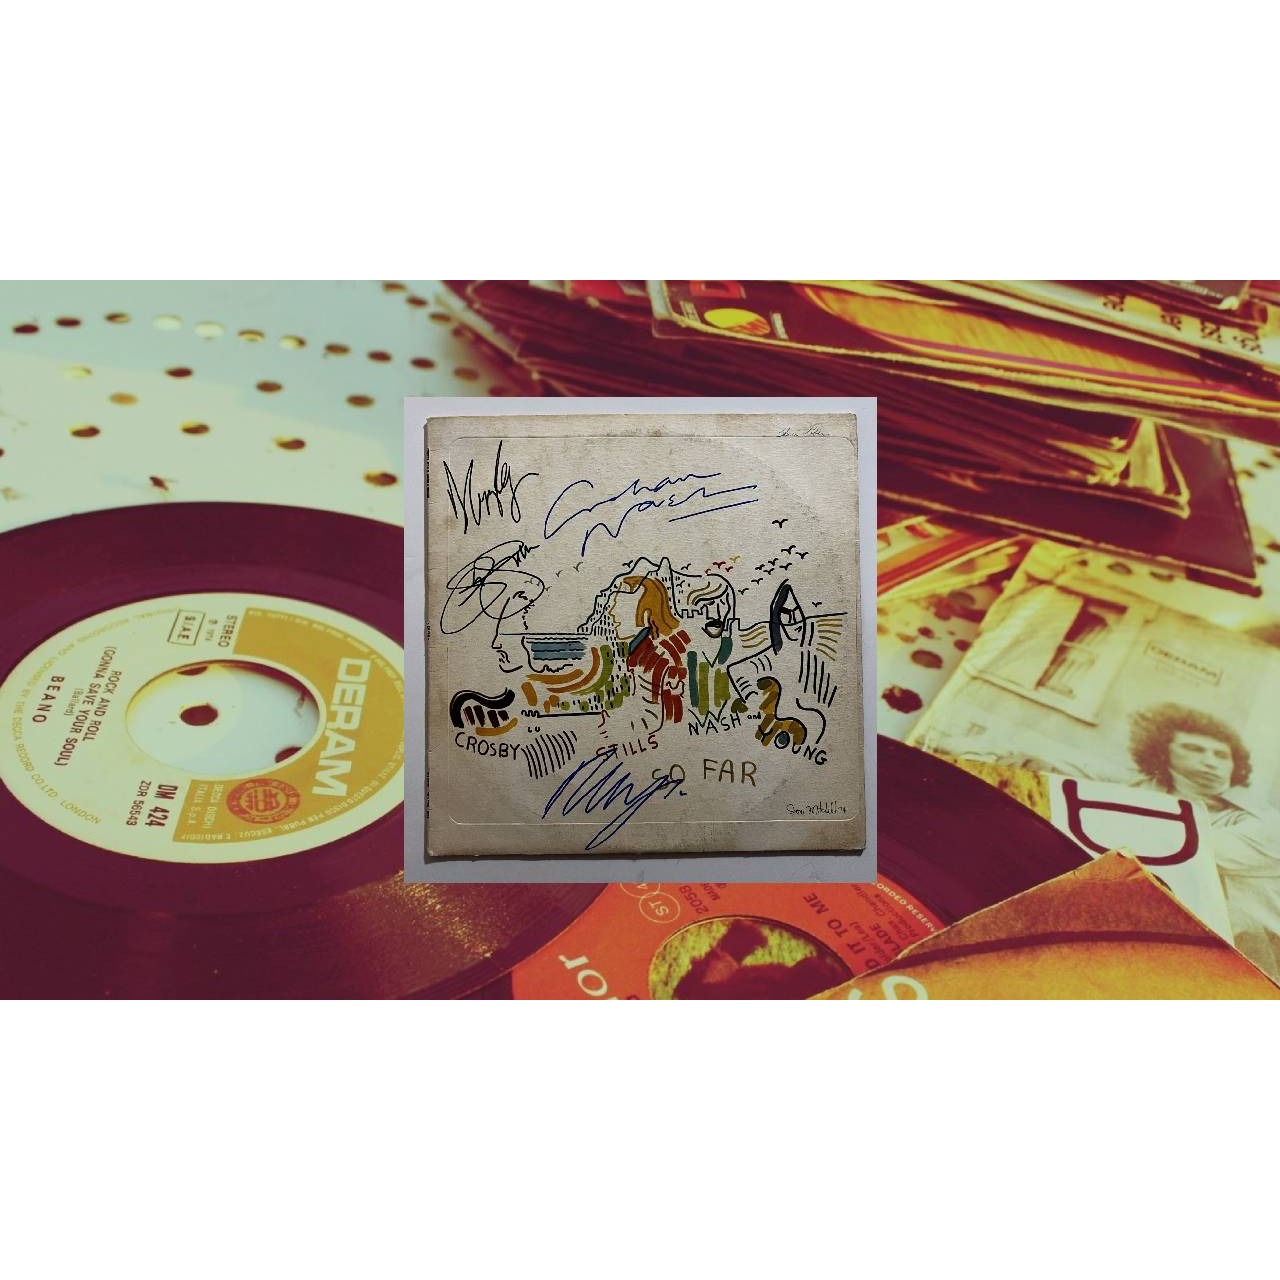 CSNY David Crosby Stephen Stills Graham Nash Neil Young "So Far" original LP signed with proof